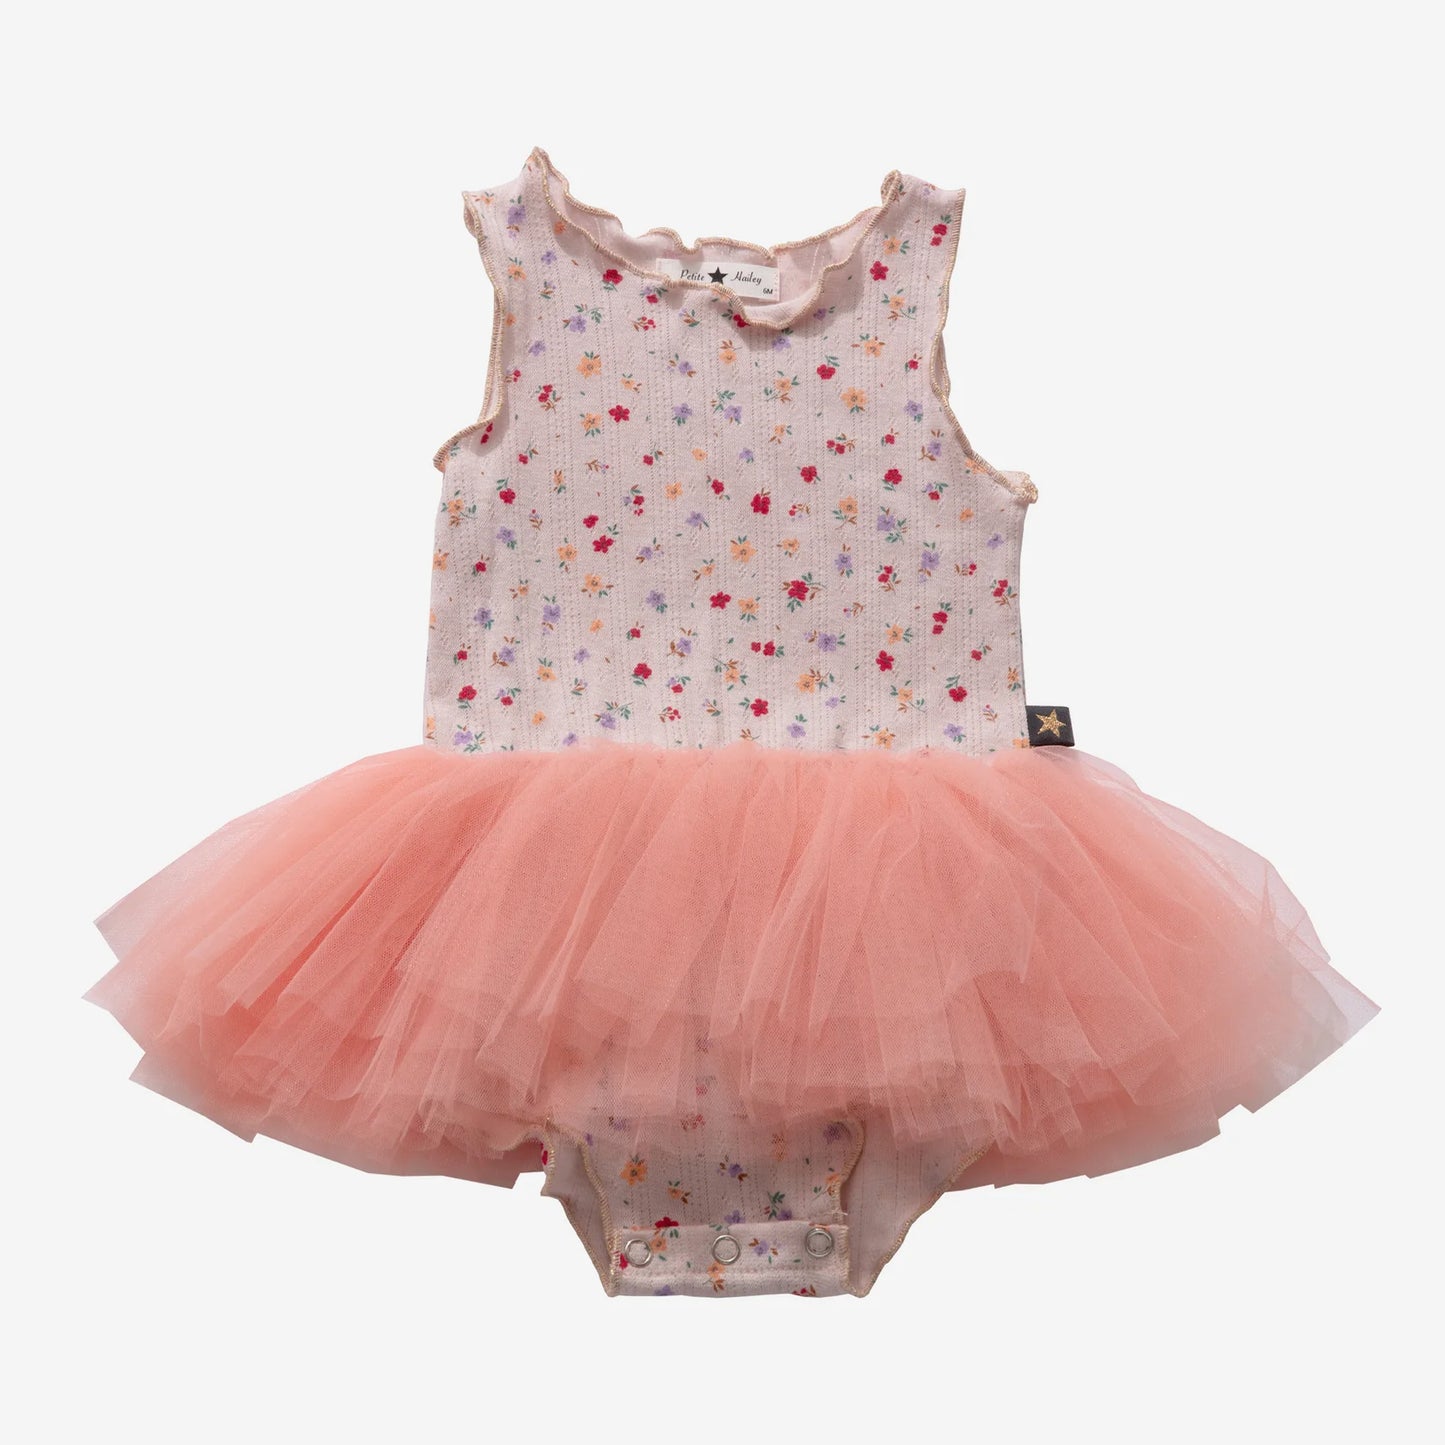 Pine Pink Tutu Dress